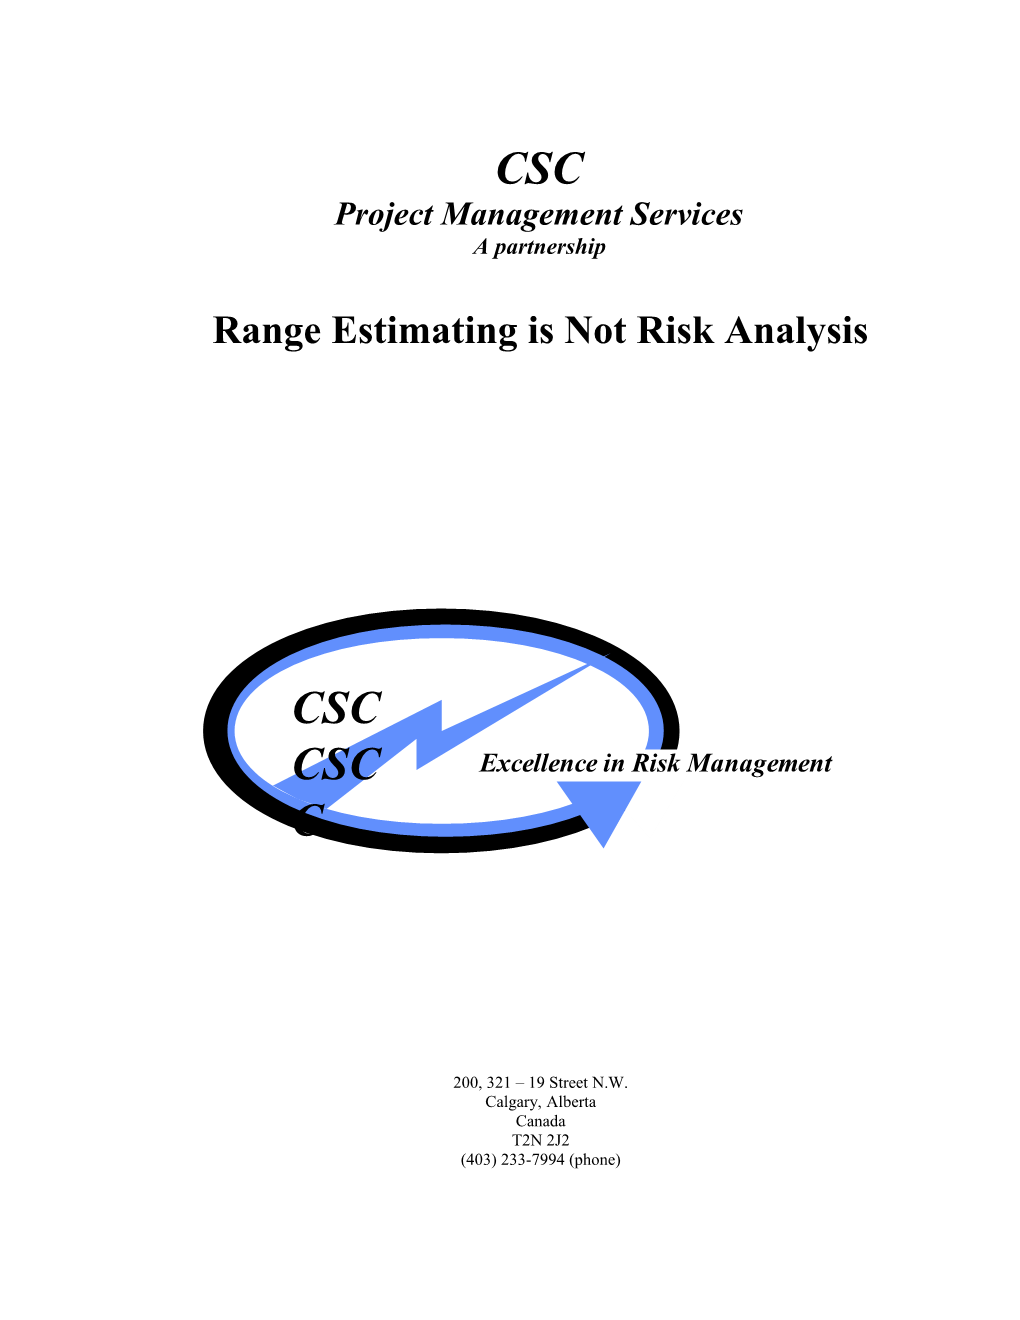 Range Estimating Is Not Risk Analysis